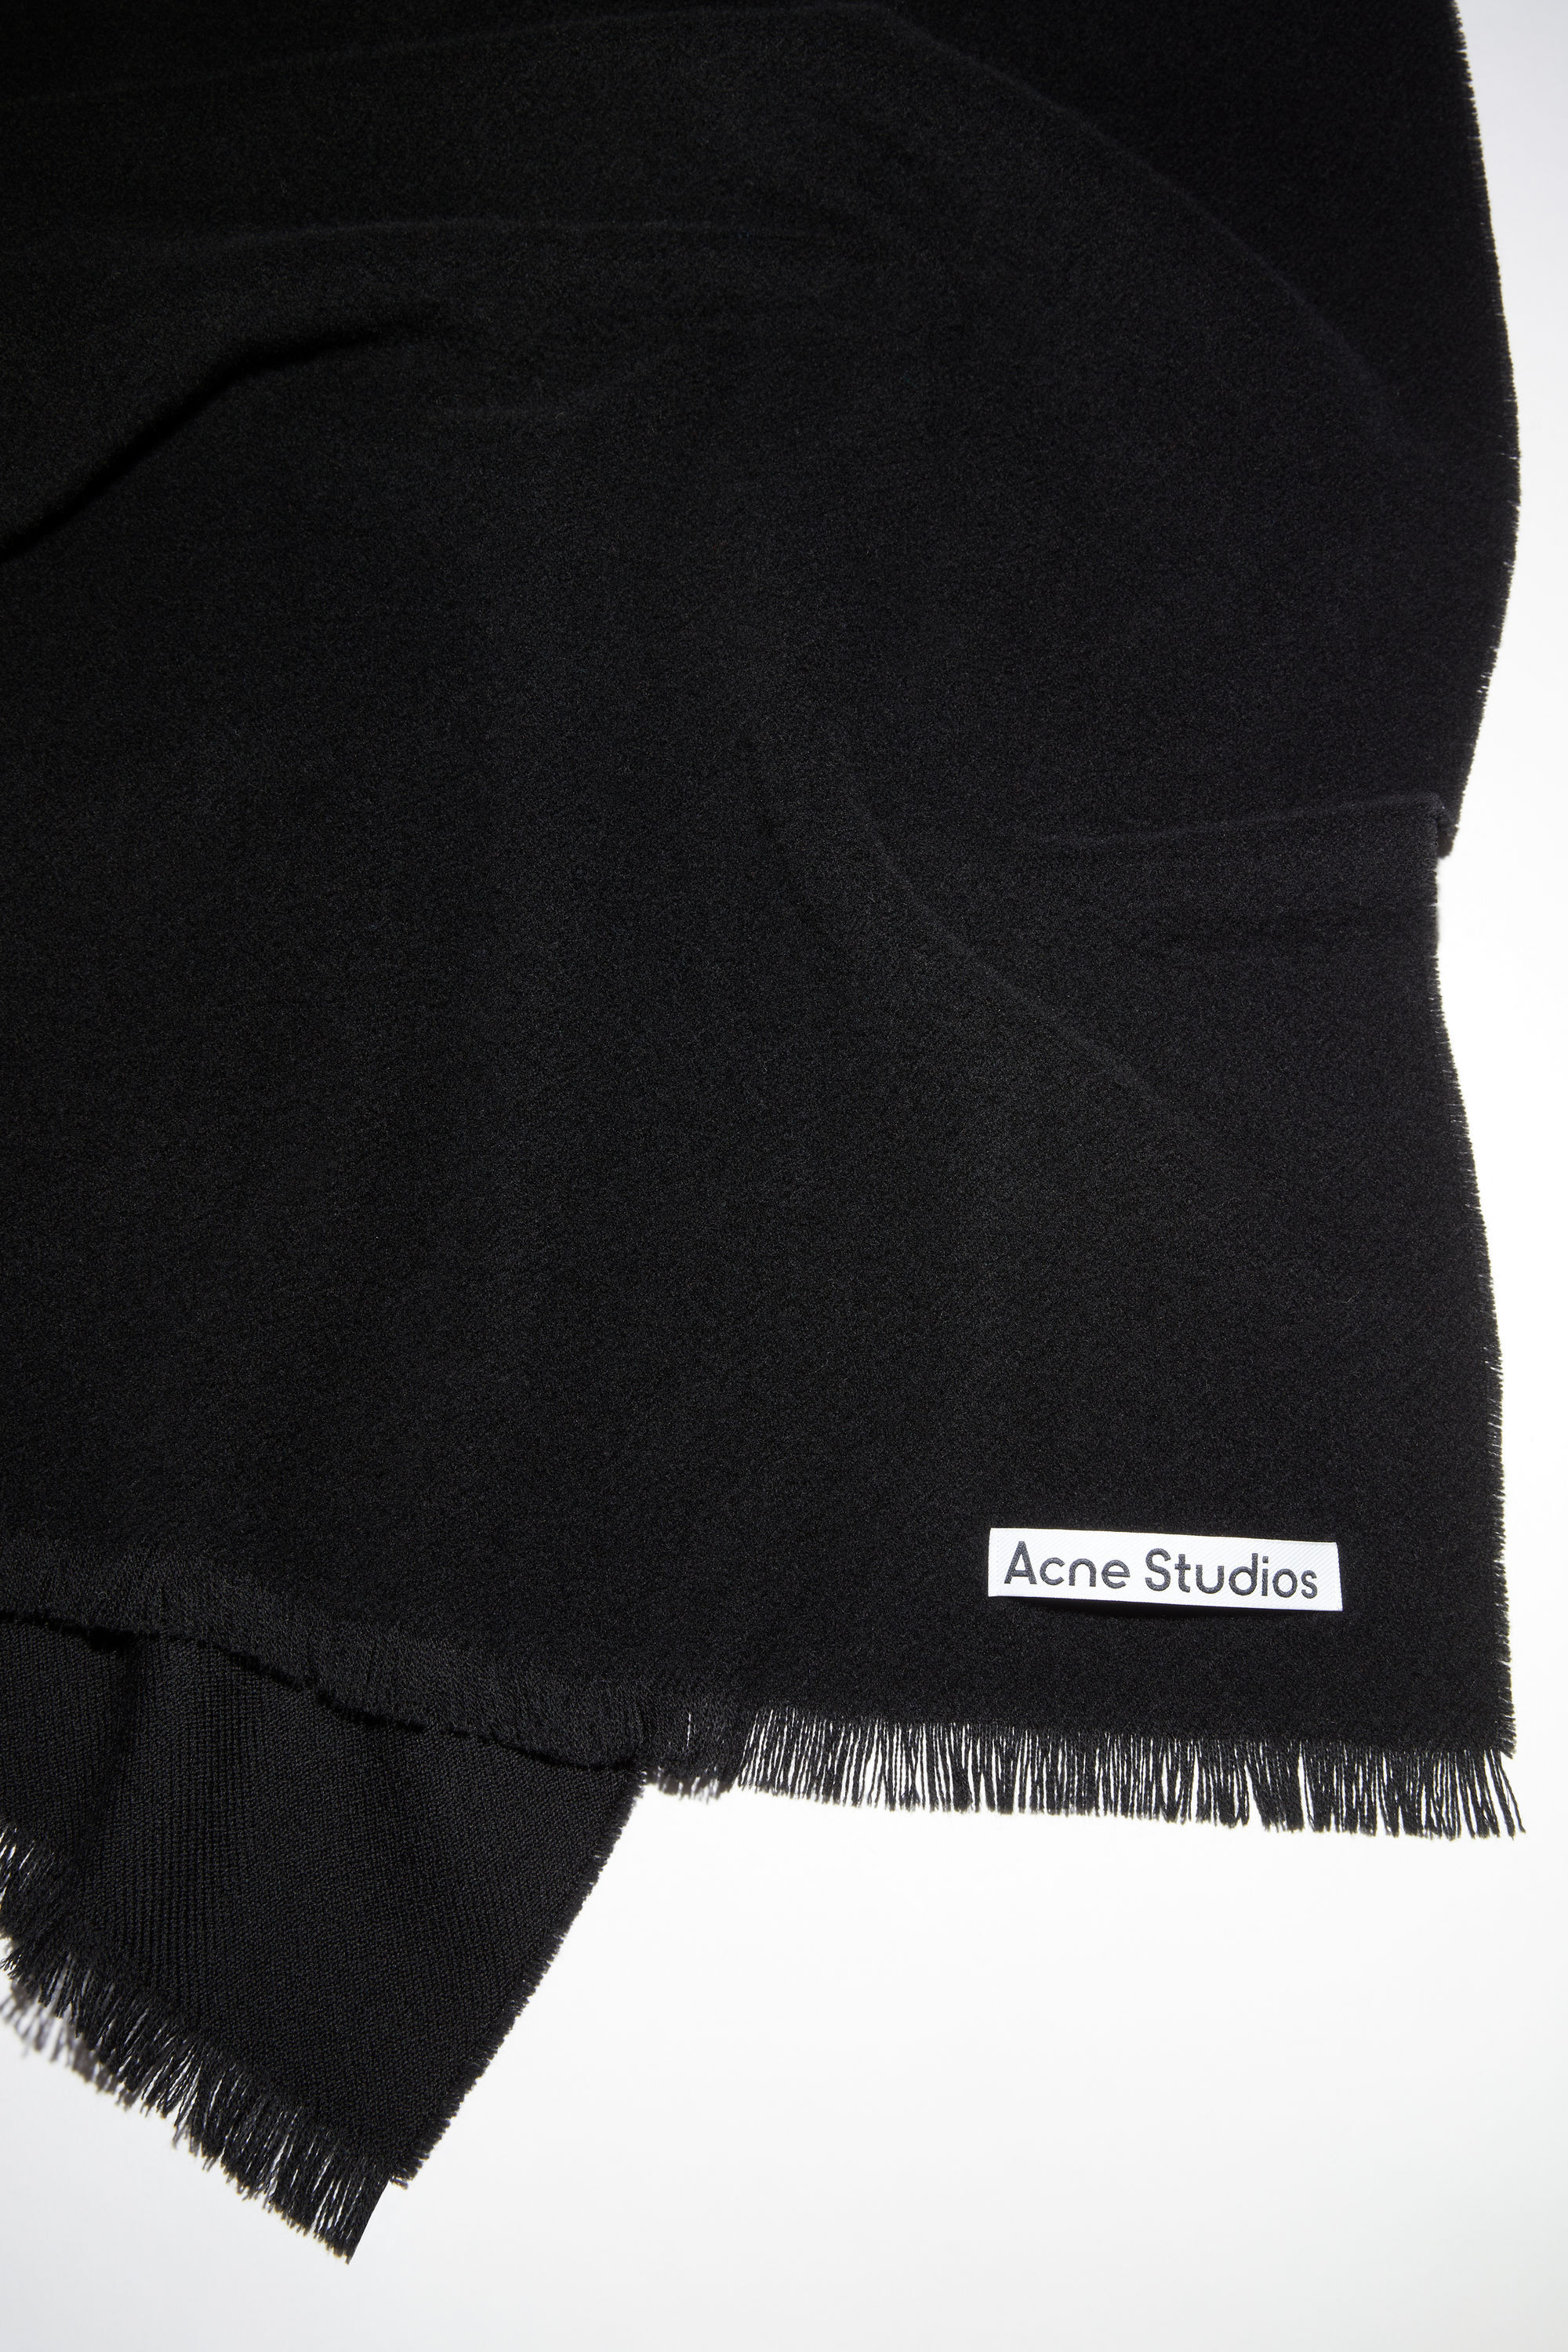 Acne Studios - ライトウールスカーフ - オーバーサイズ - ブラック